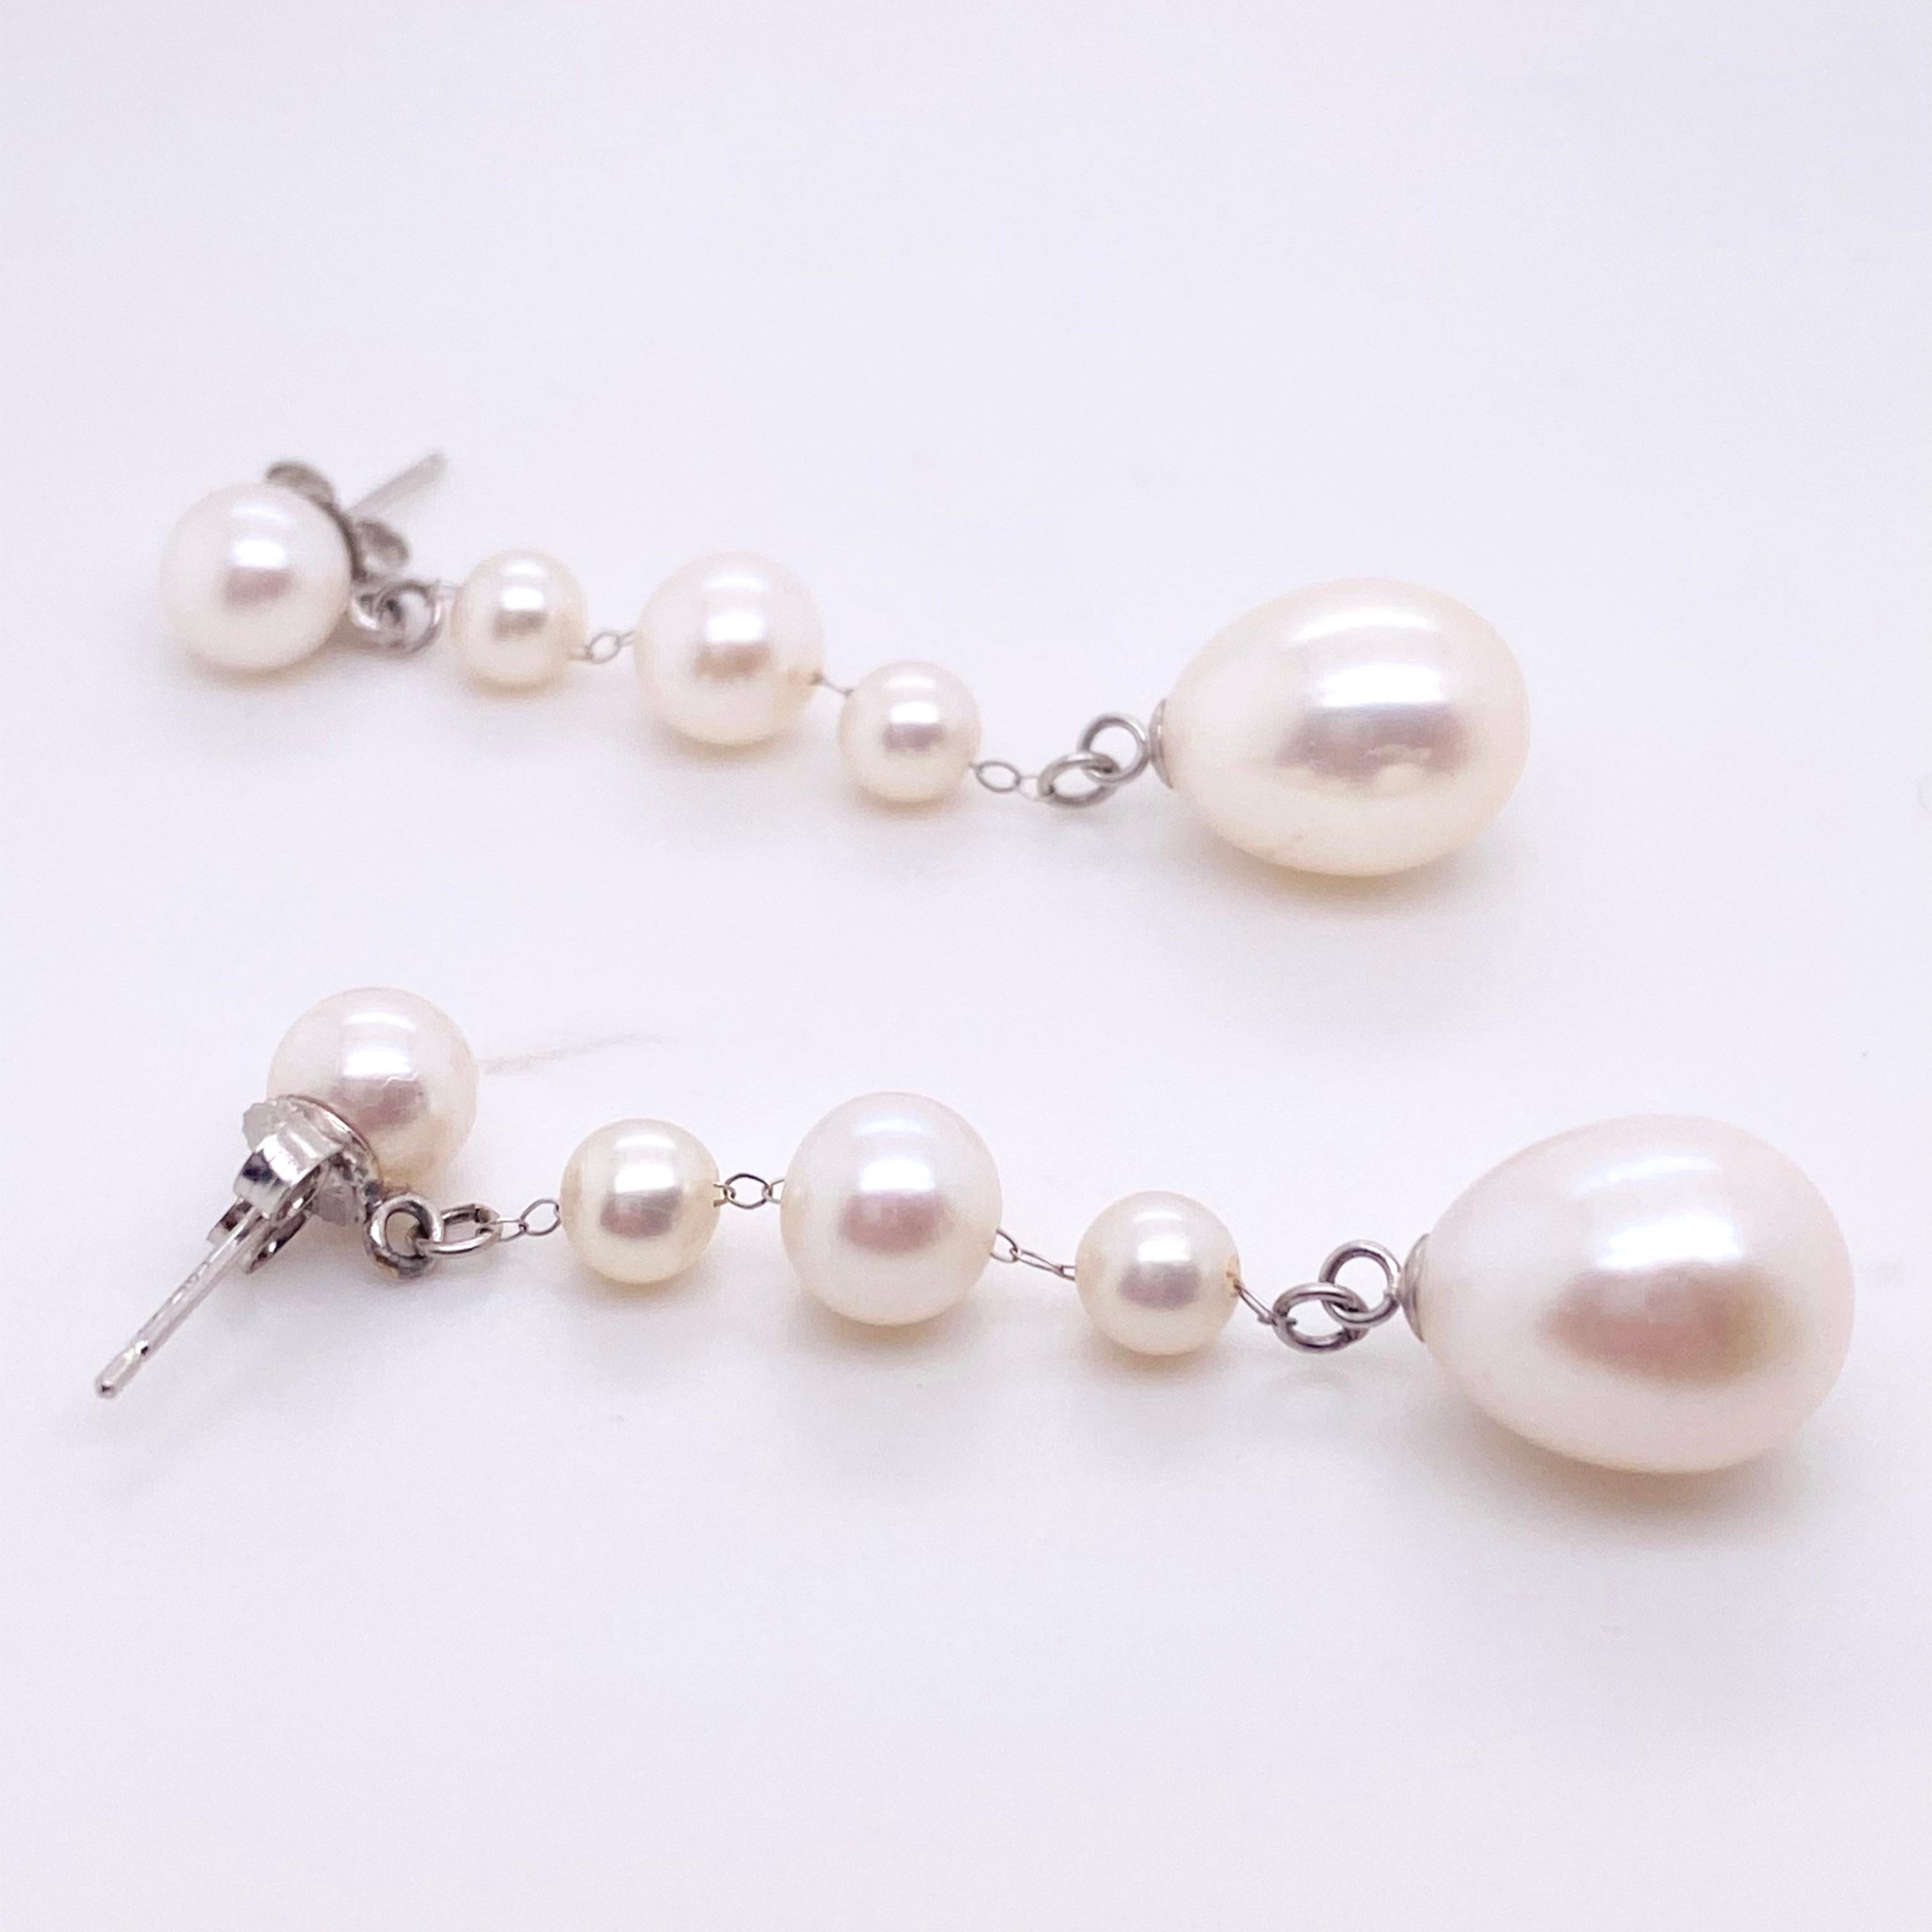 3 pearl drop earrings